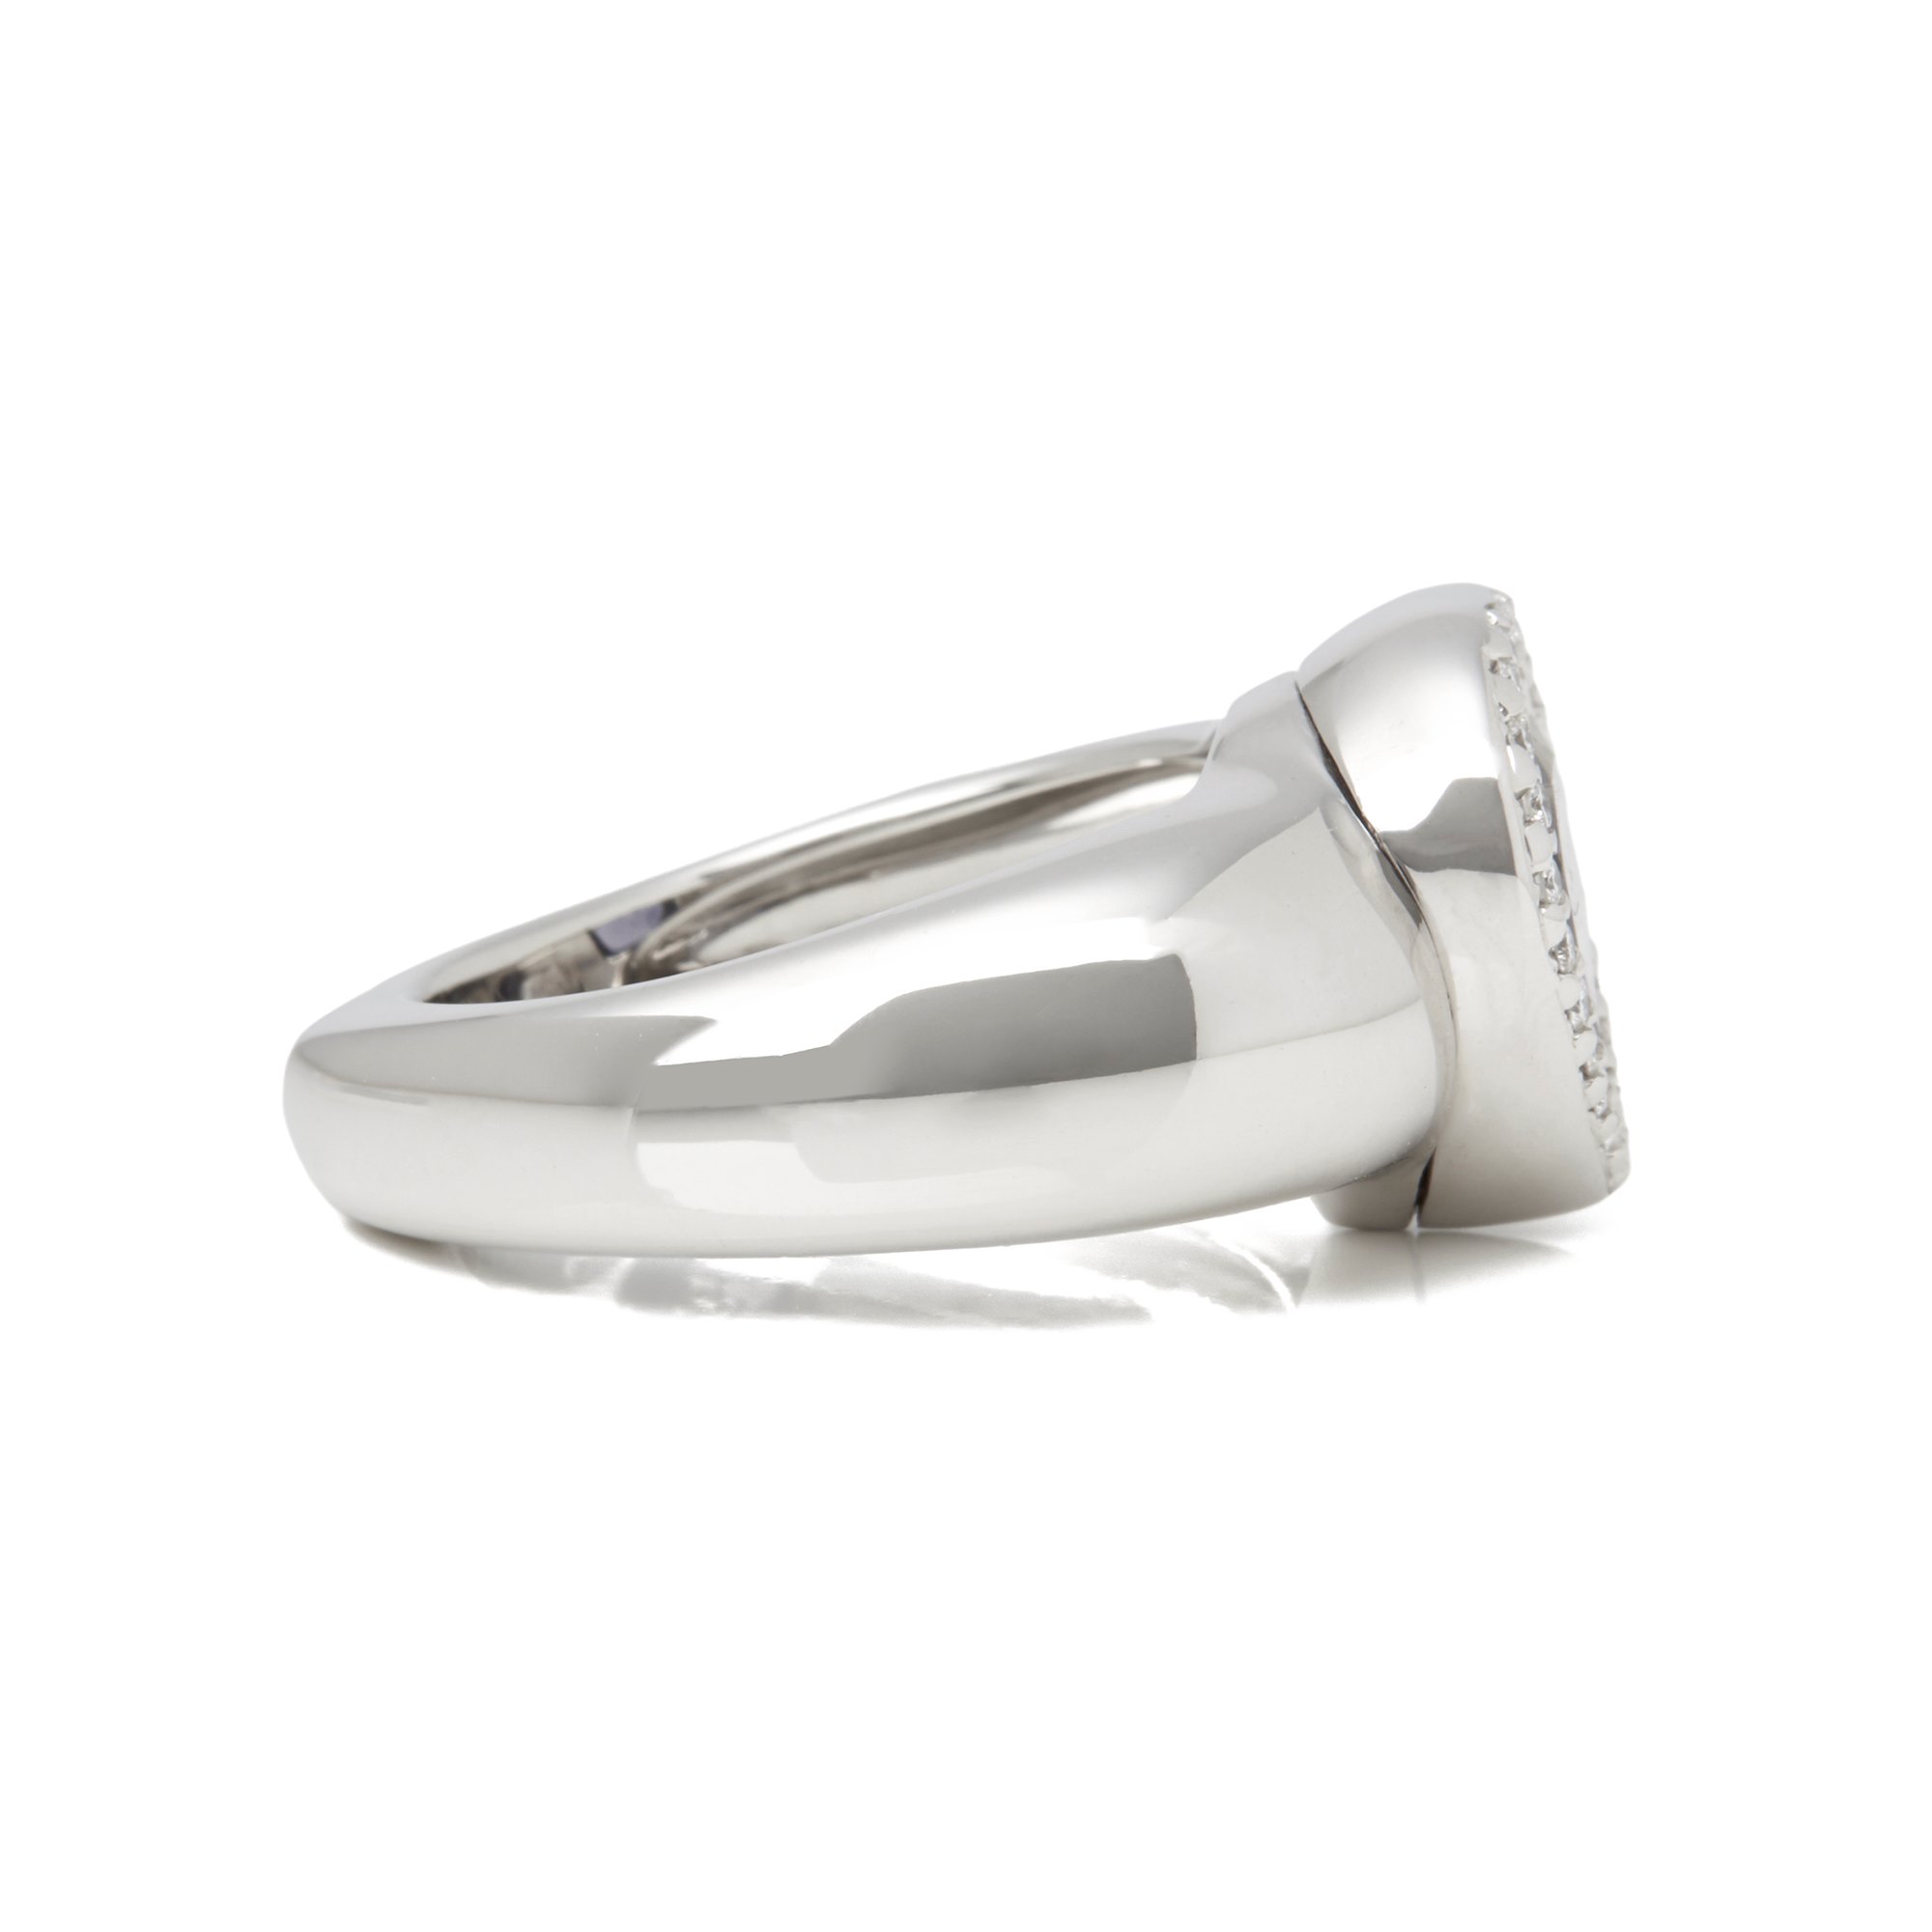 Piaget 18k White Gold Iolite & Diamond Heart Cocktail Ring